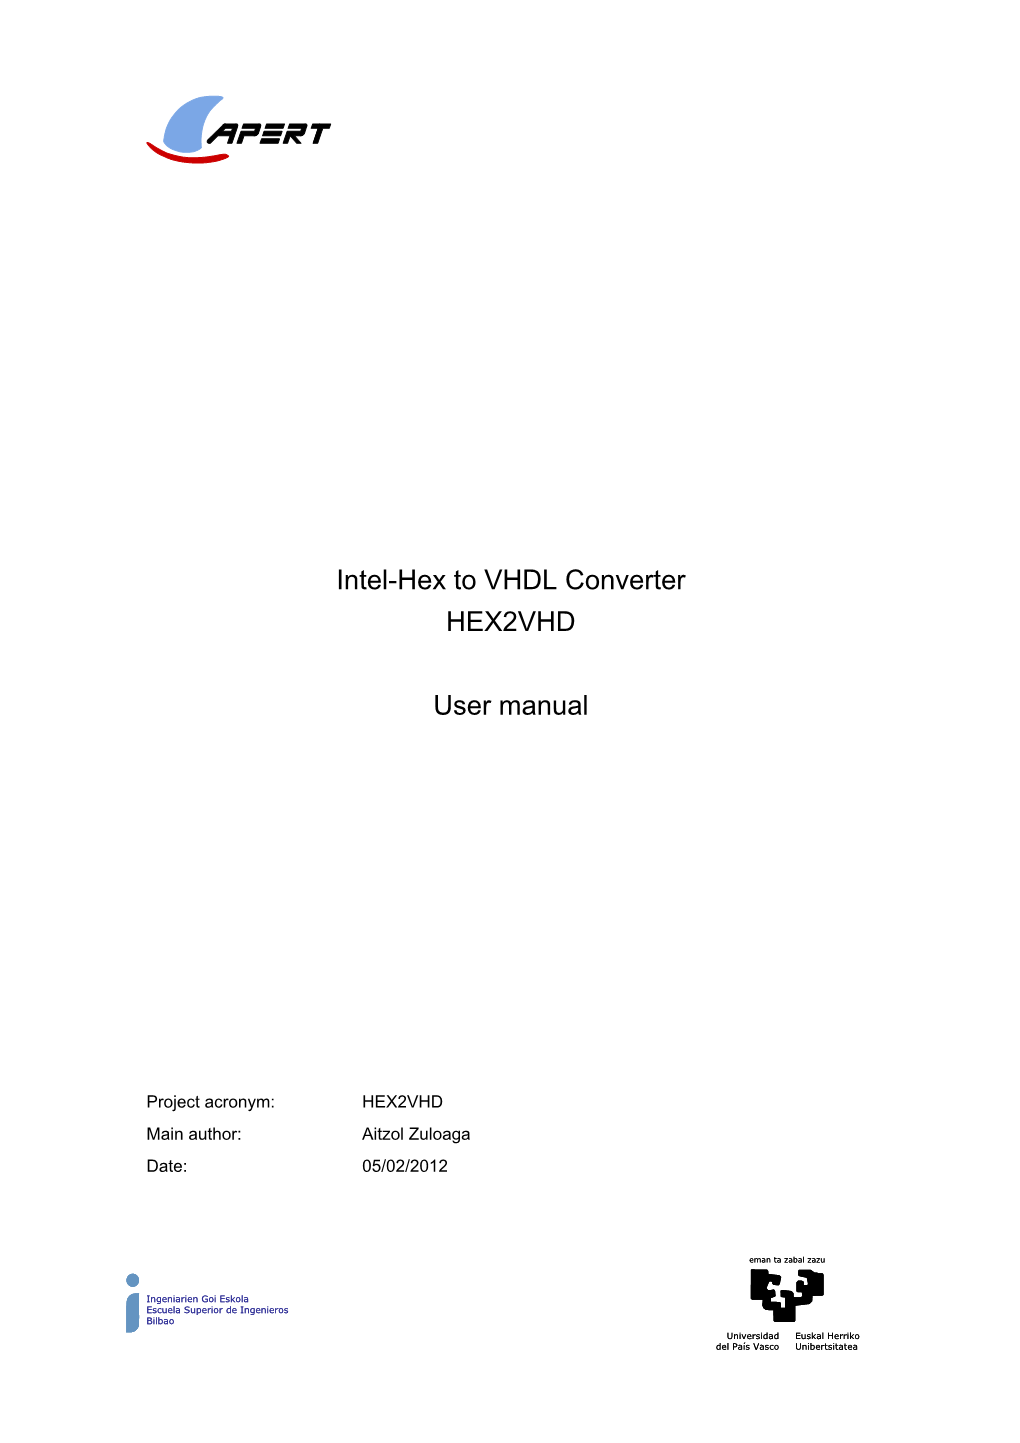 Intel-Hex to VHDL Converter HEX2VHD User Manual